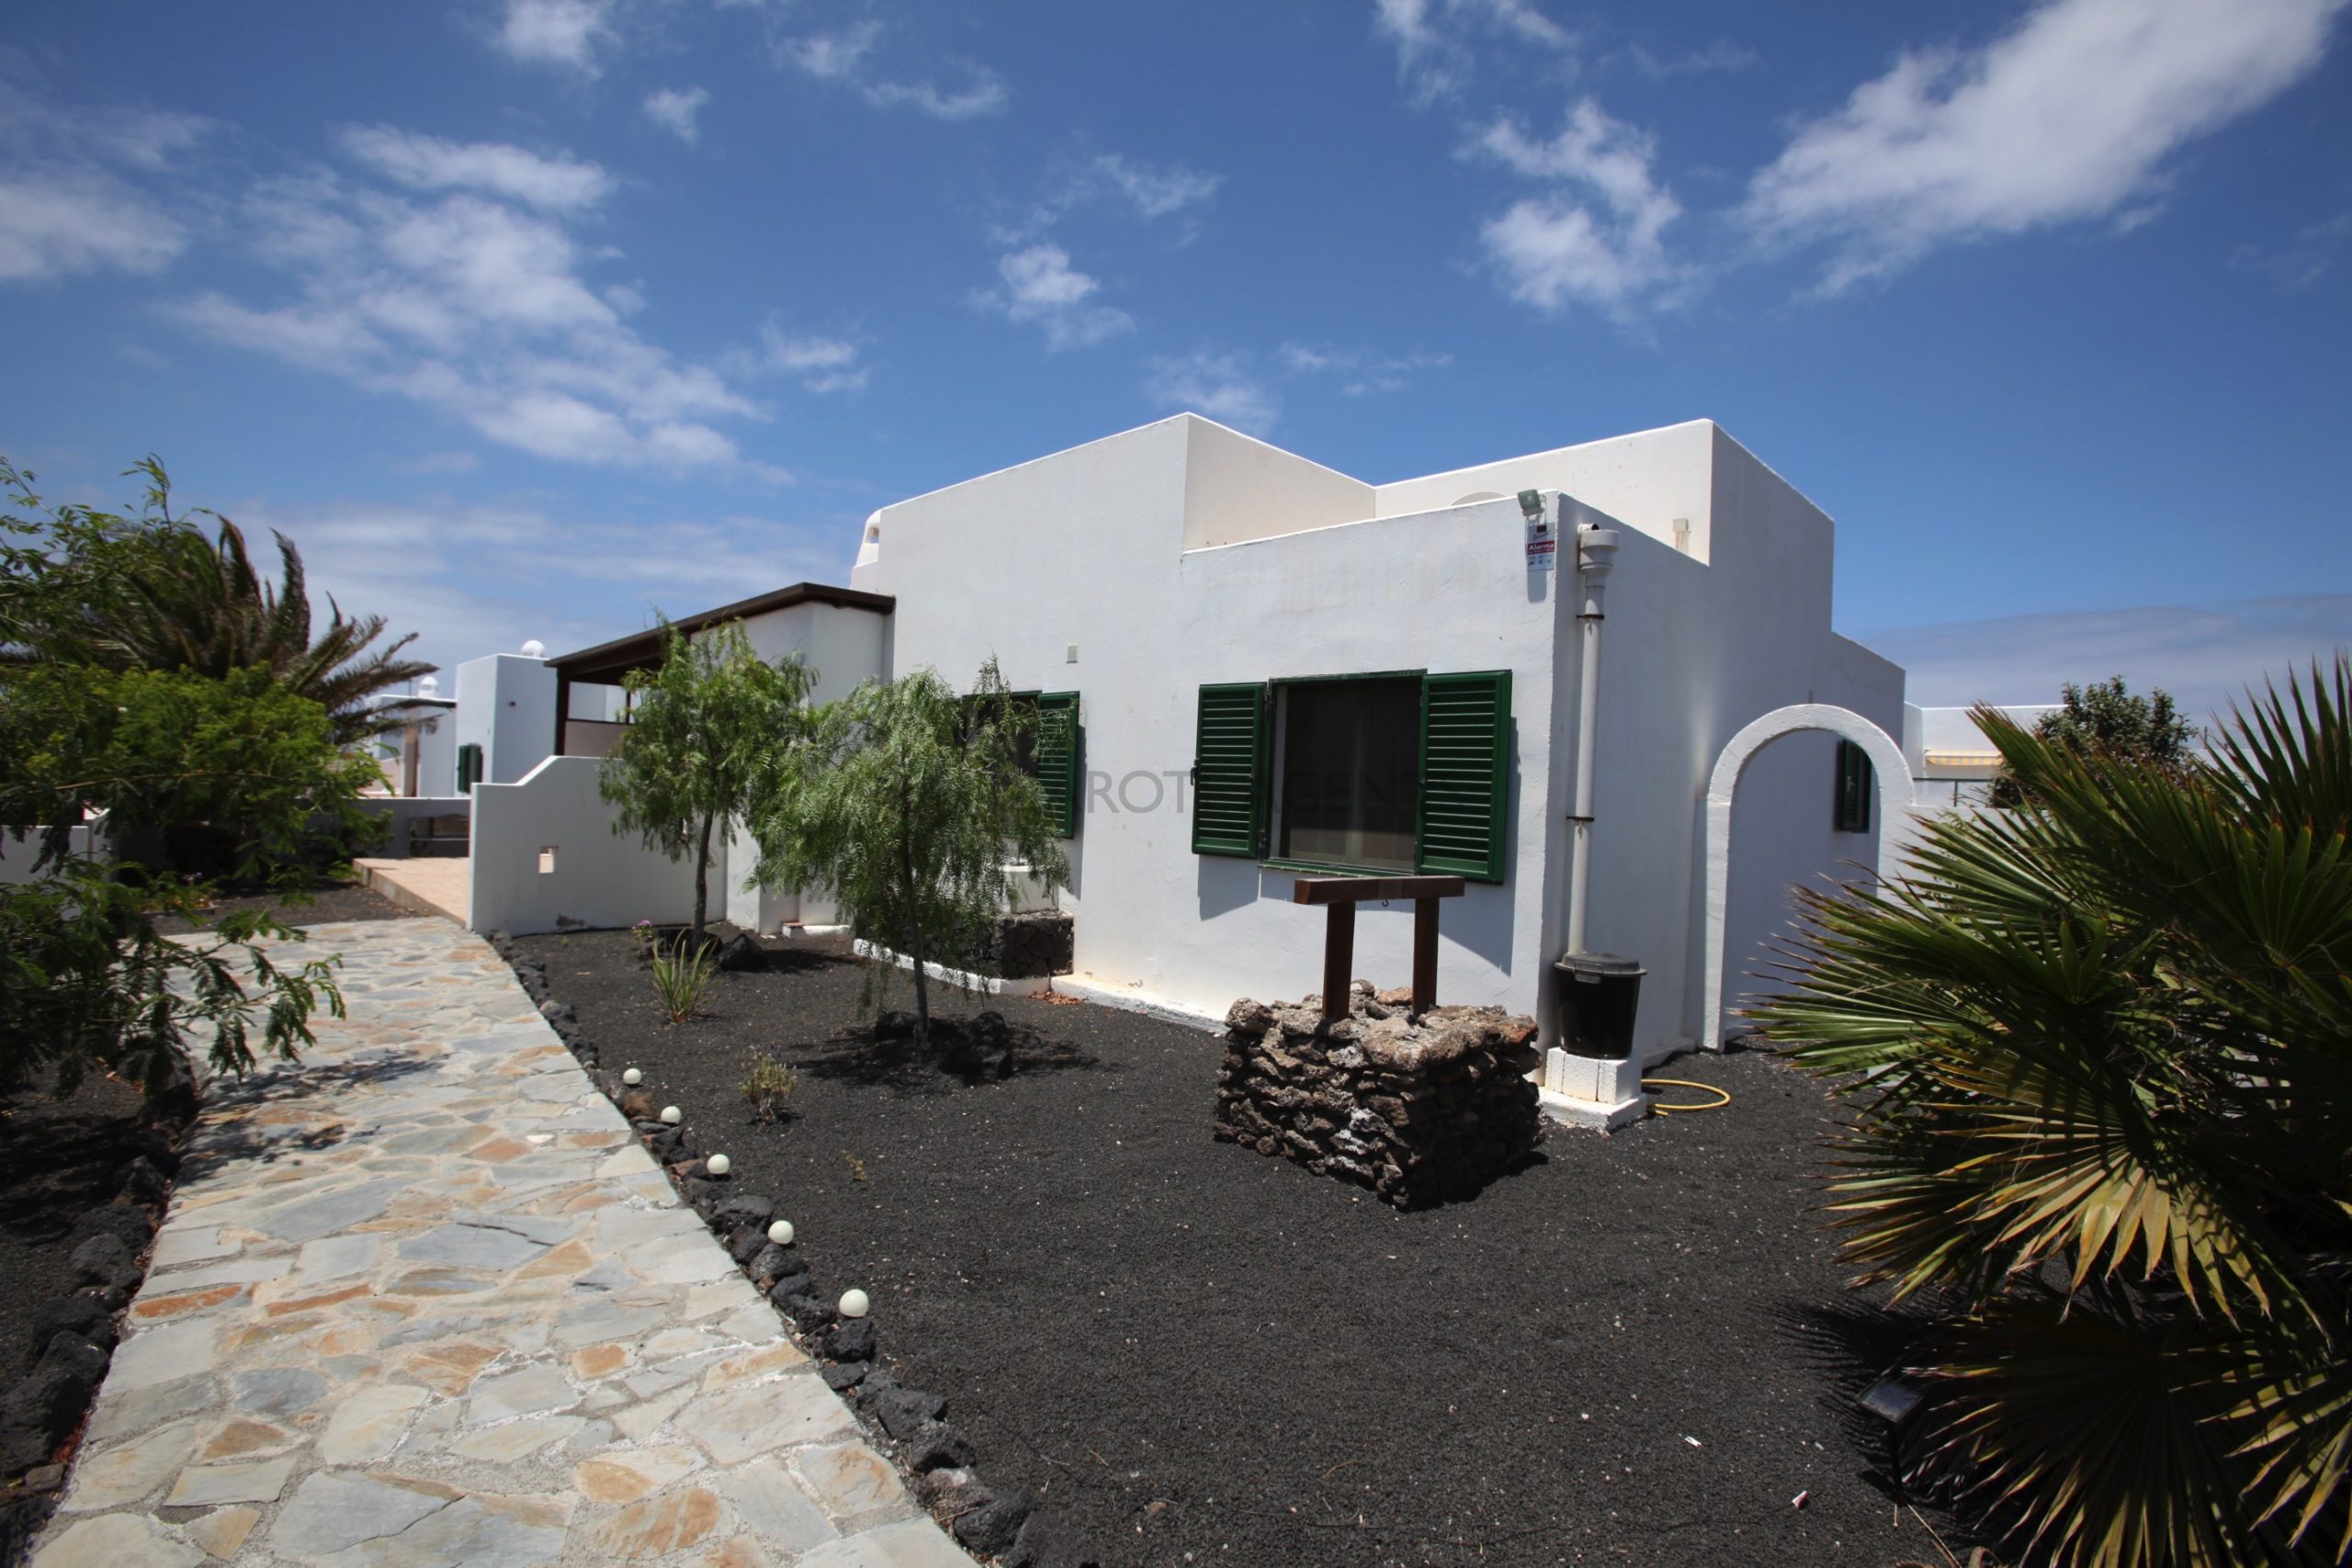 Detached 3 Bedroom Bungalow in Complex with Communal Pool in Playa Blanca